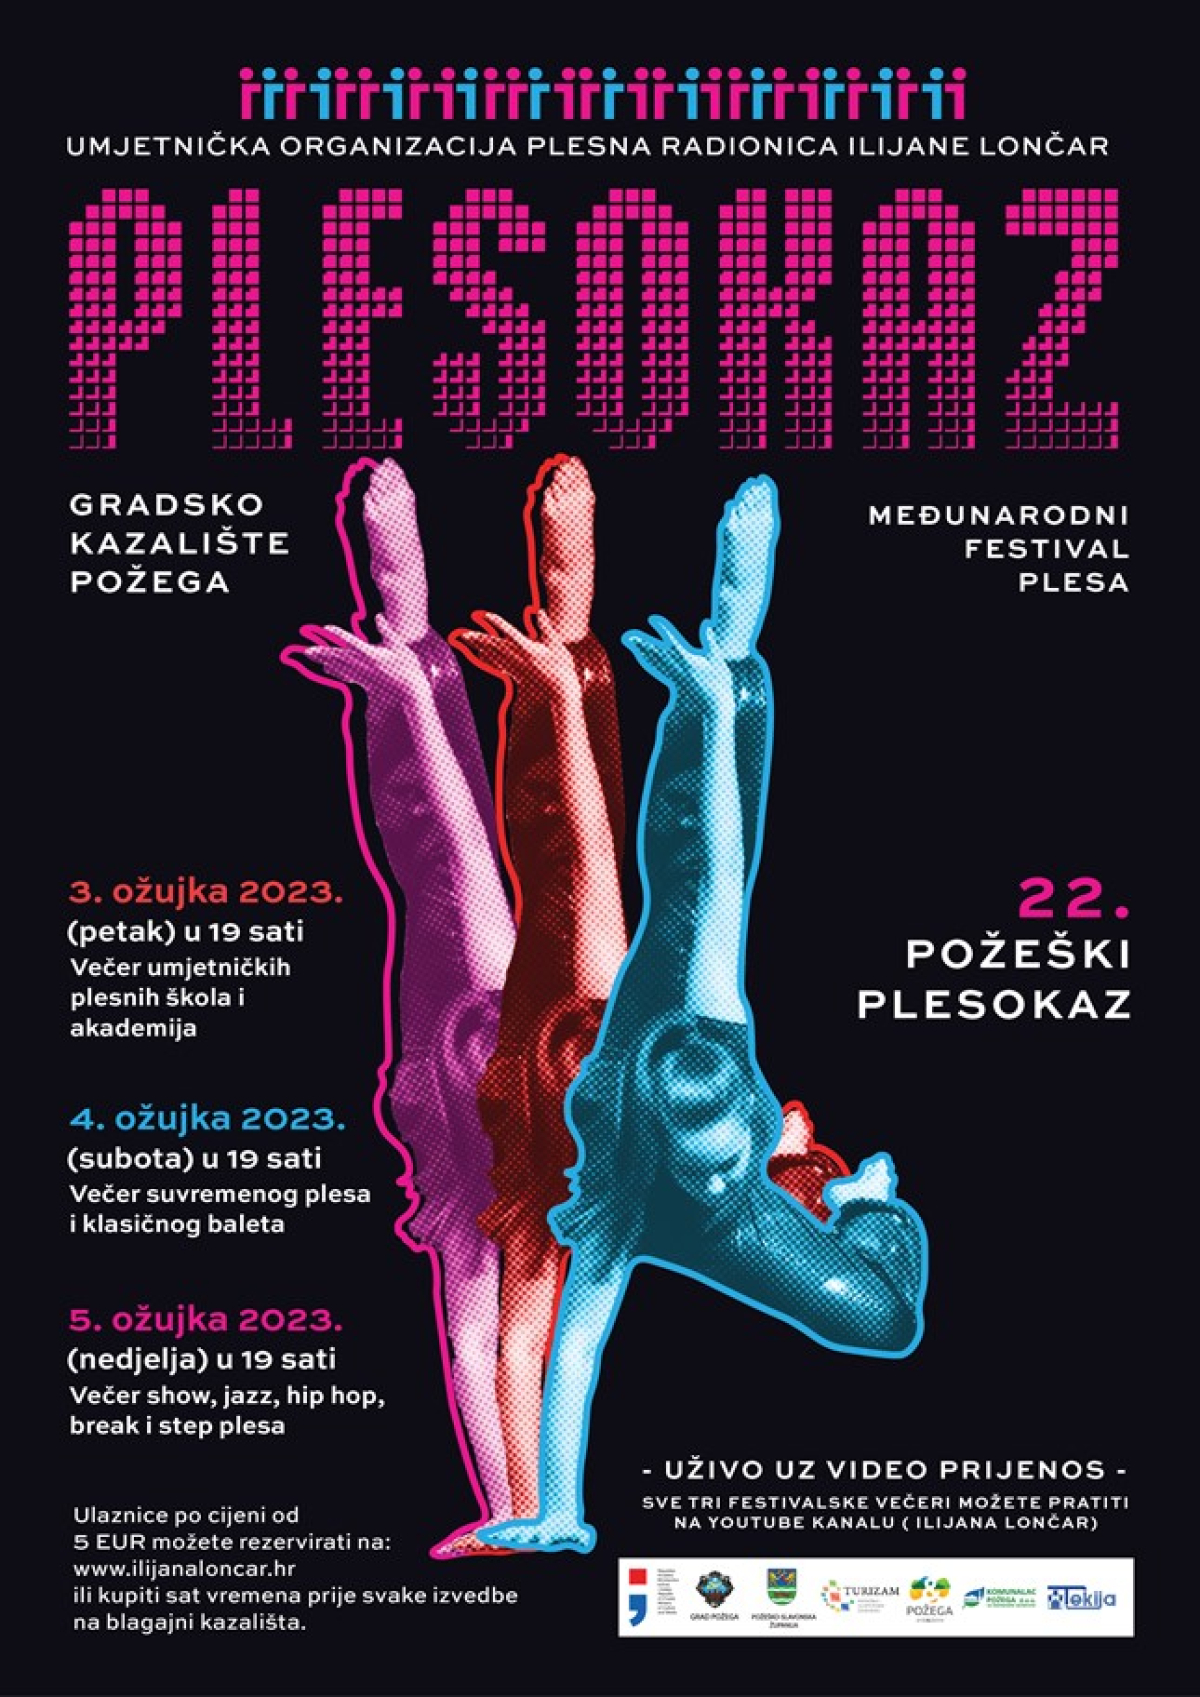 Požega.eu | Od 3.ožujka 2023. godine 22. Požeški Plesokaz - Međunarodni festival plesa